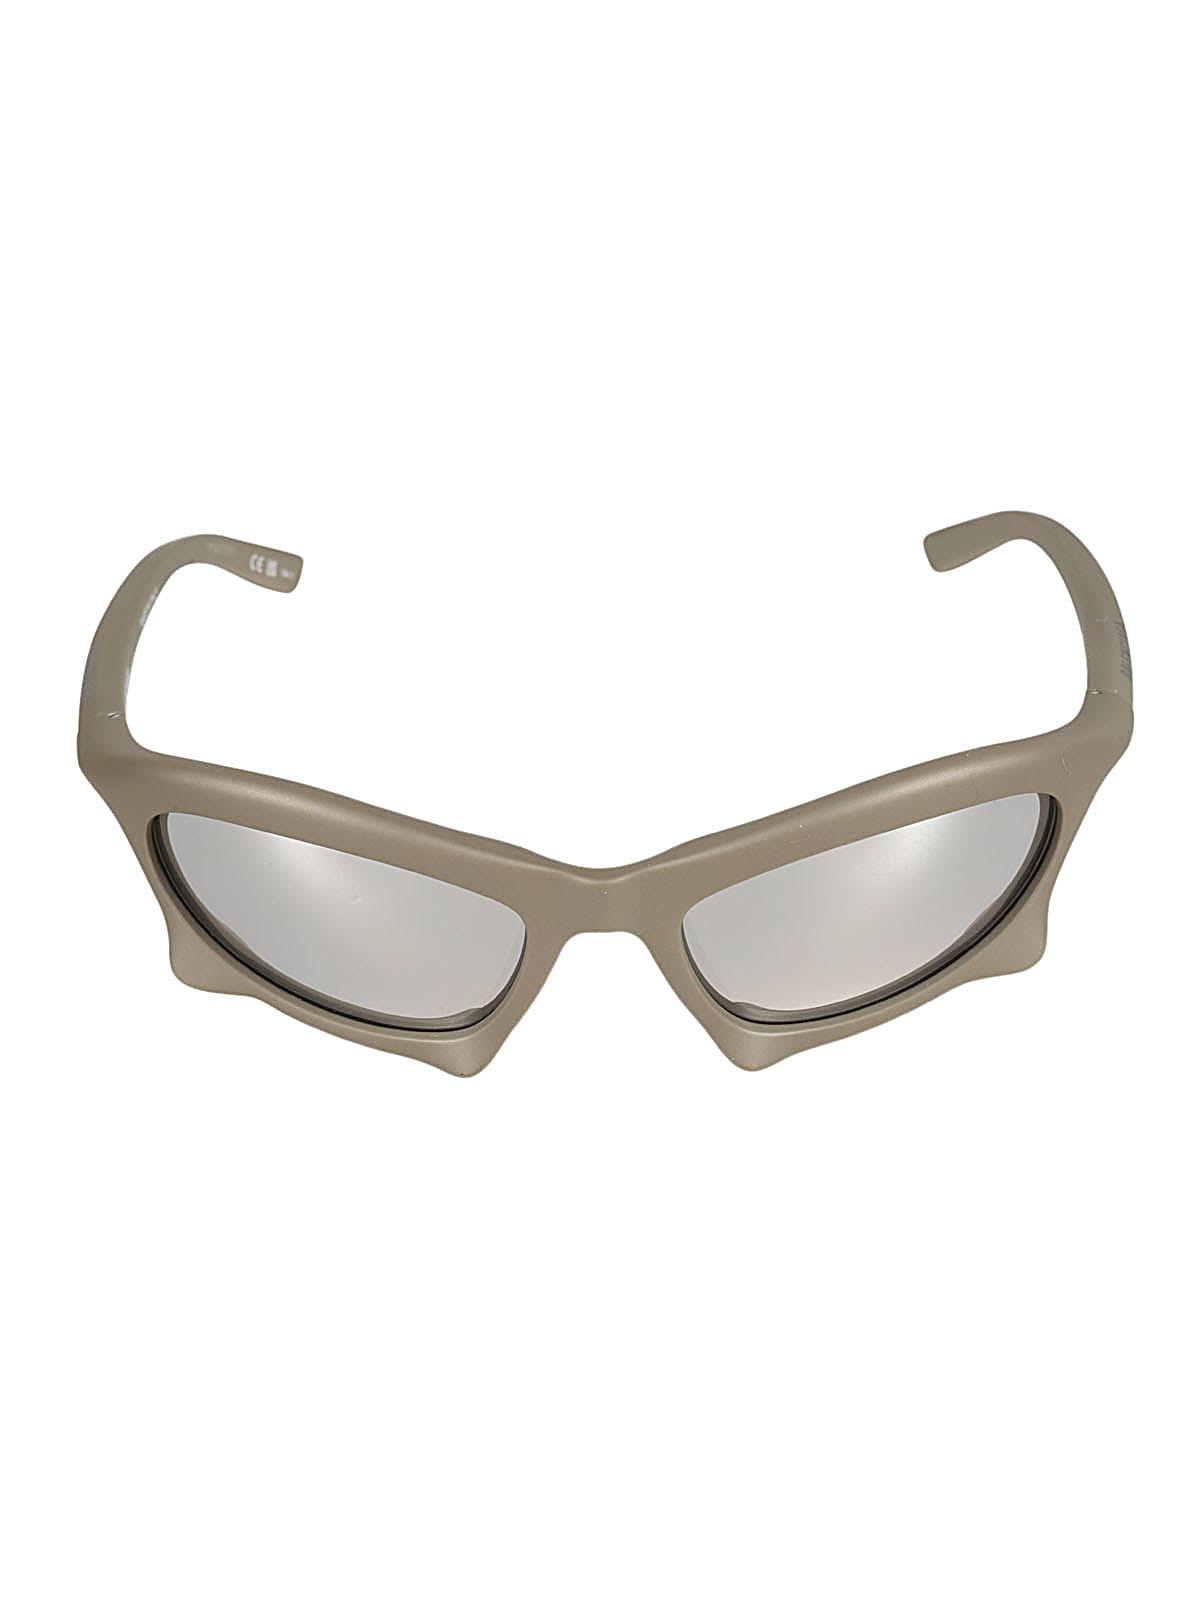 Cat Eye Logo Sunglasses